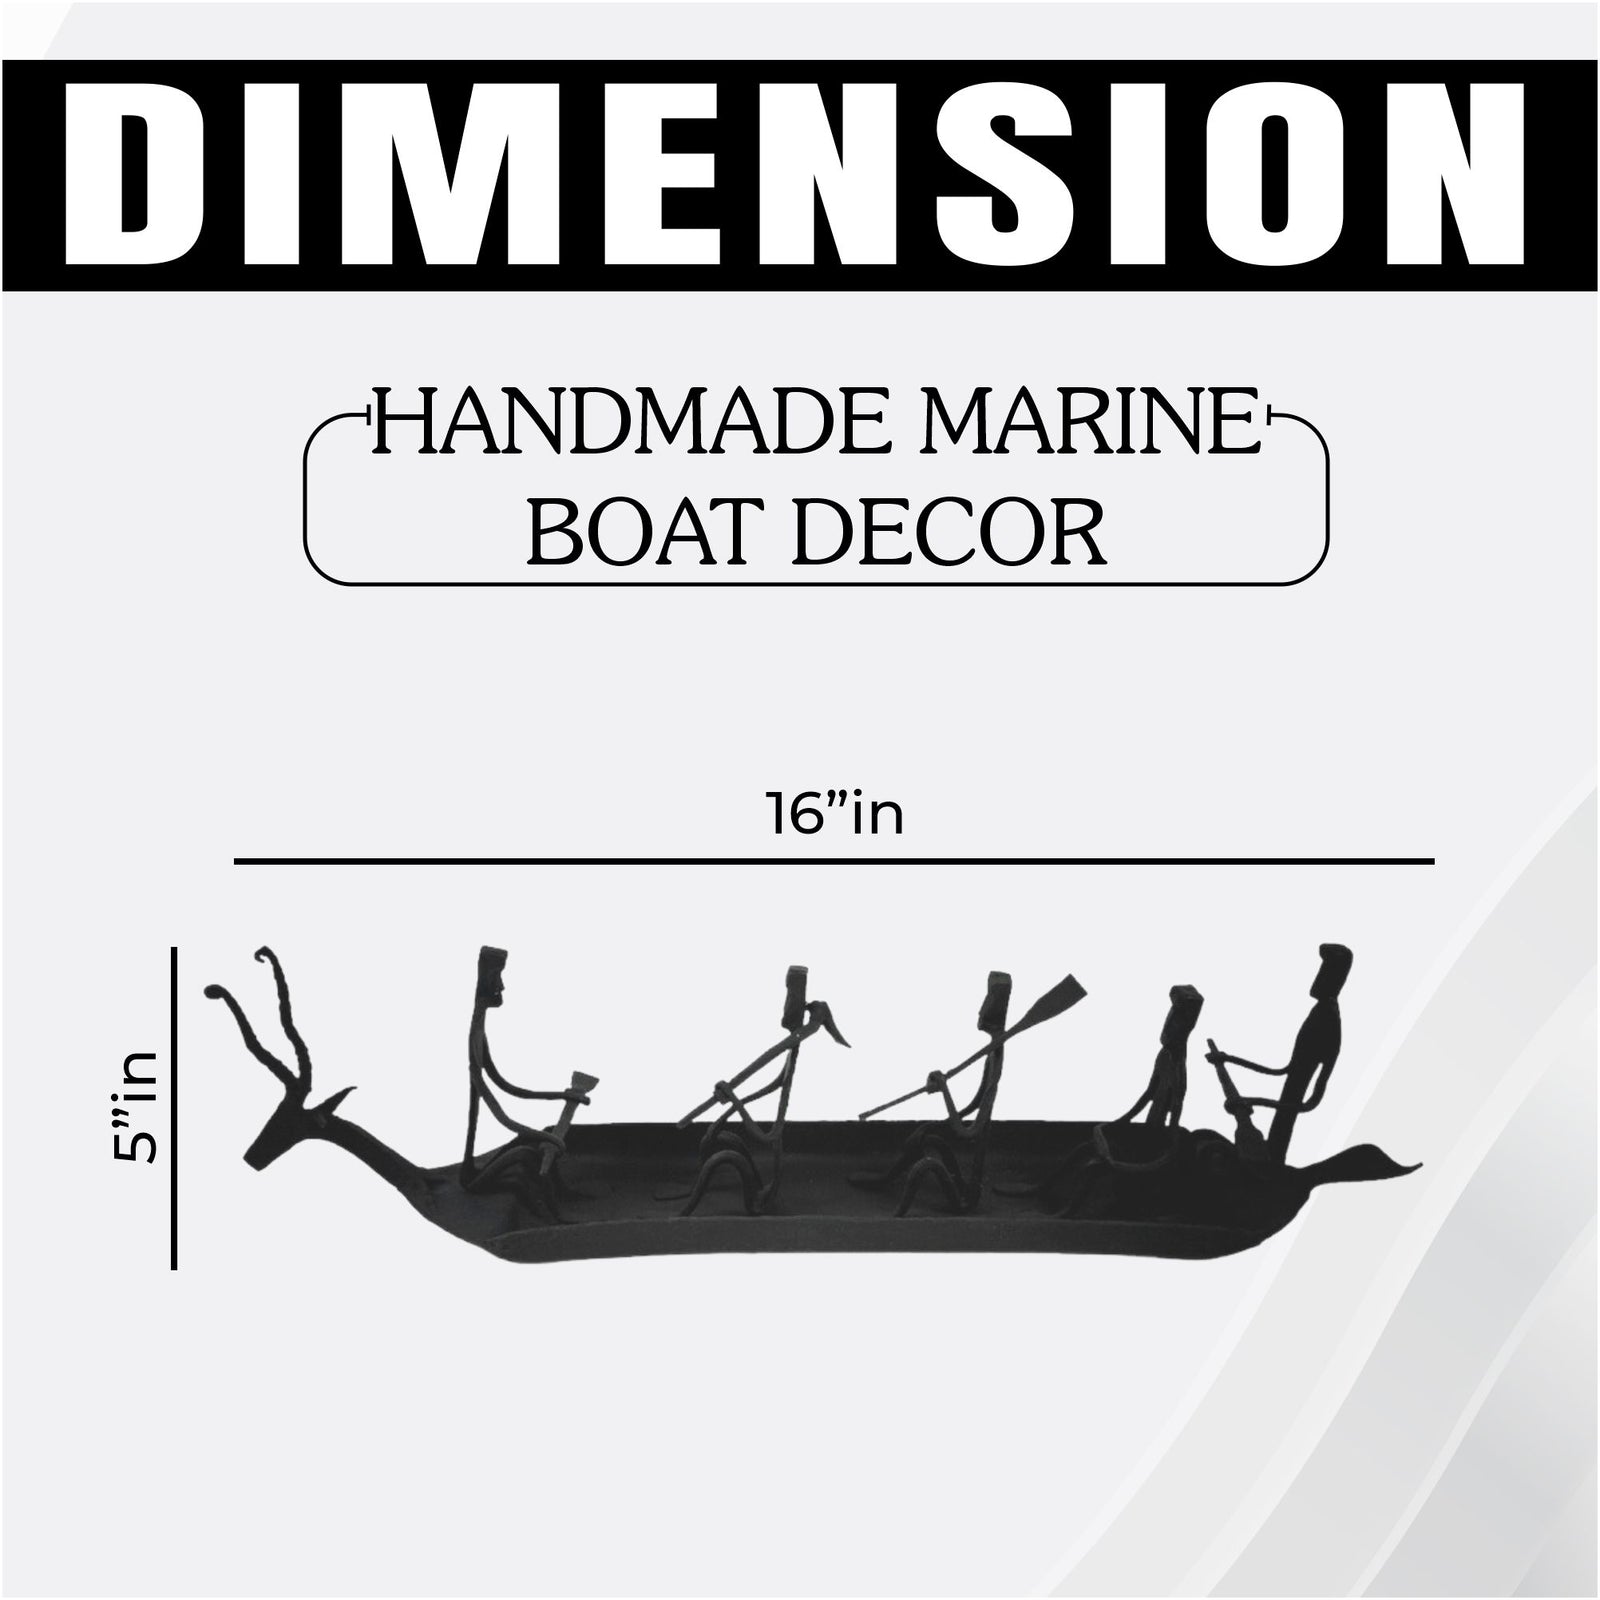 Handmade Marine Boat Decor